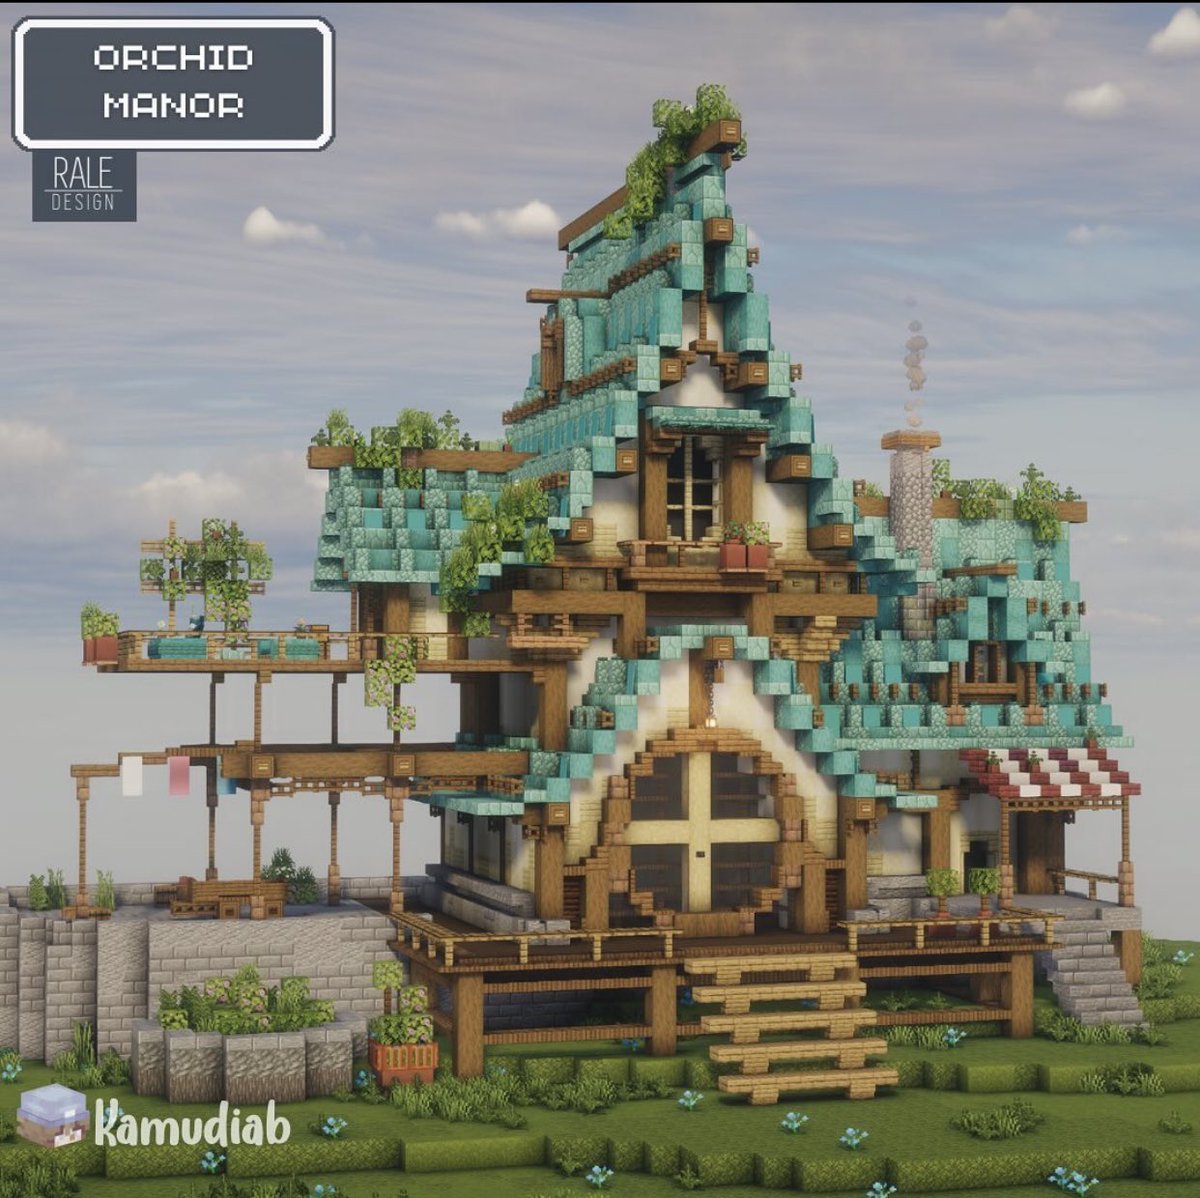 Orchid Manor built by kamuduab and @RaleDesign #minecraft建築コミュ #MinecraftServer #minecraftbuilds #Minecraft